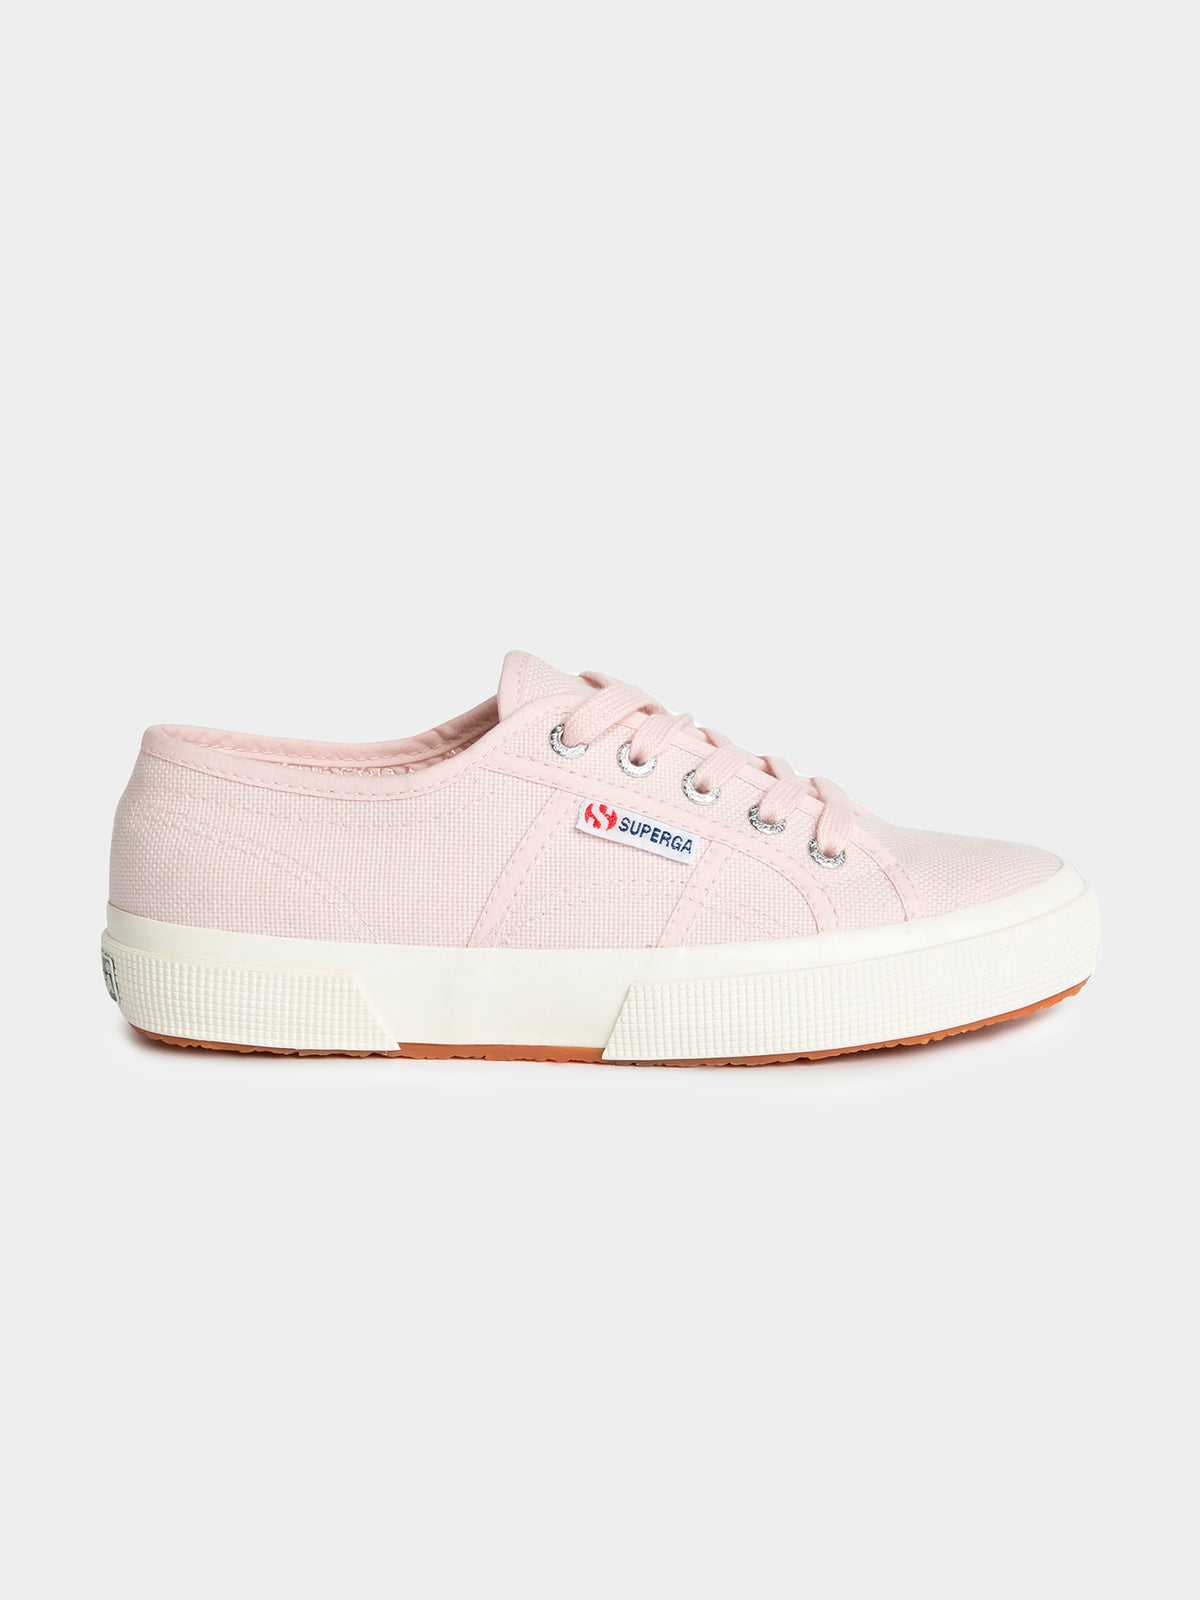 Unisex 2750 Cotu Classic Sneakers in Pink